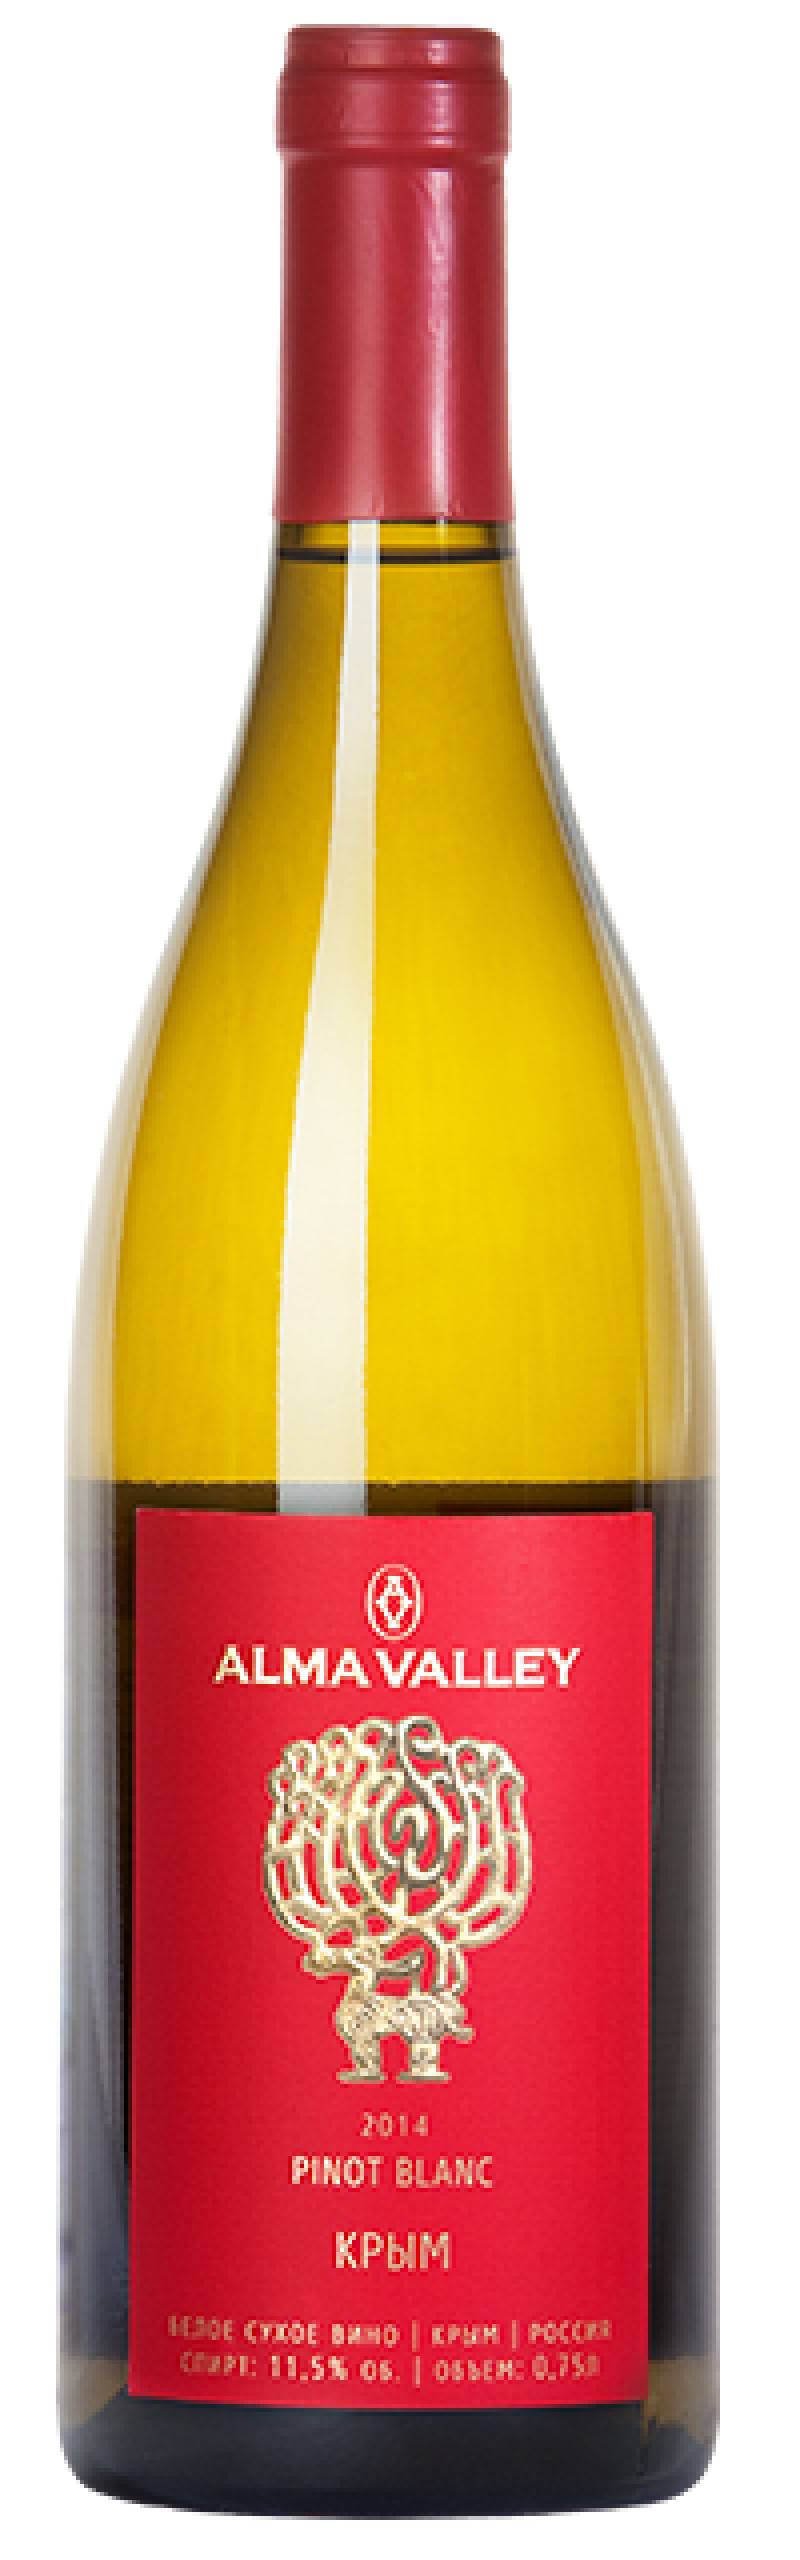 Вино Альминская Долина. Пино Блан  2014  0,75 л.  Alma Valley Pinot Blanc 2014 0,75 L.